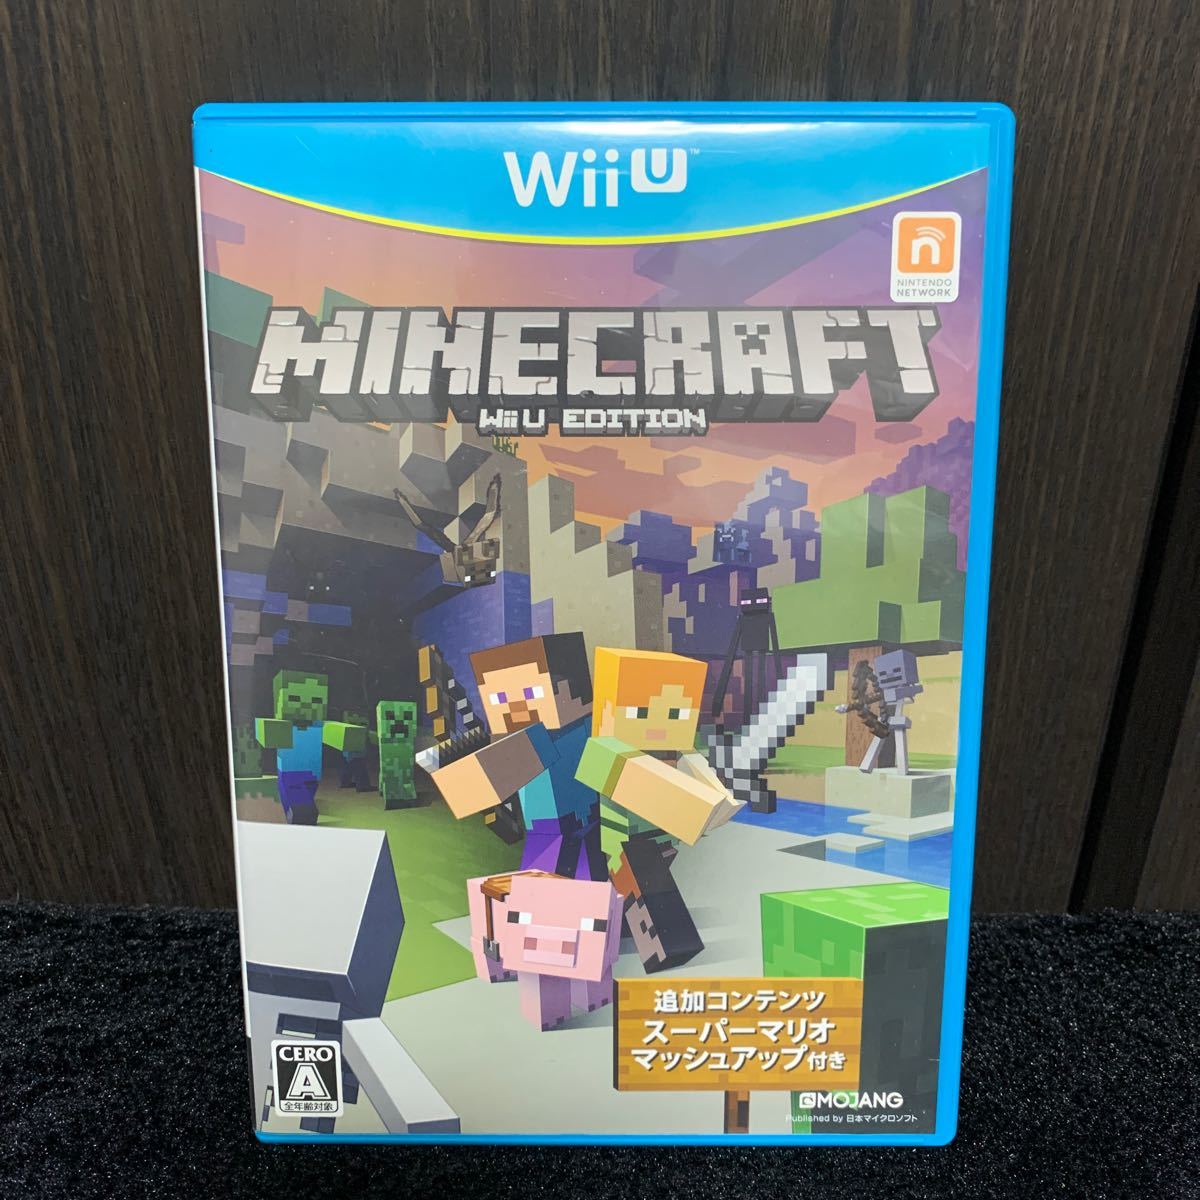 WiiU マインクラフトWiiU マインクラフト Minecraft EDITION WiiUソフト マイクラ